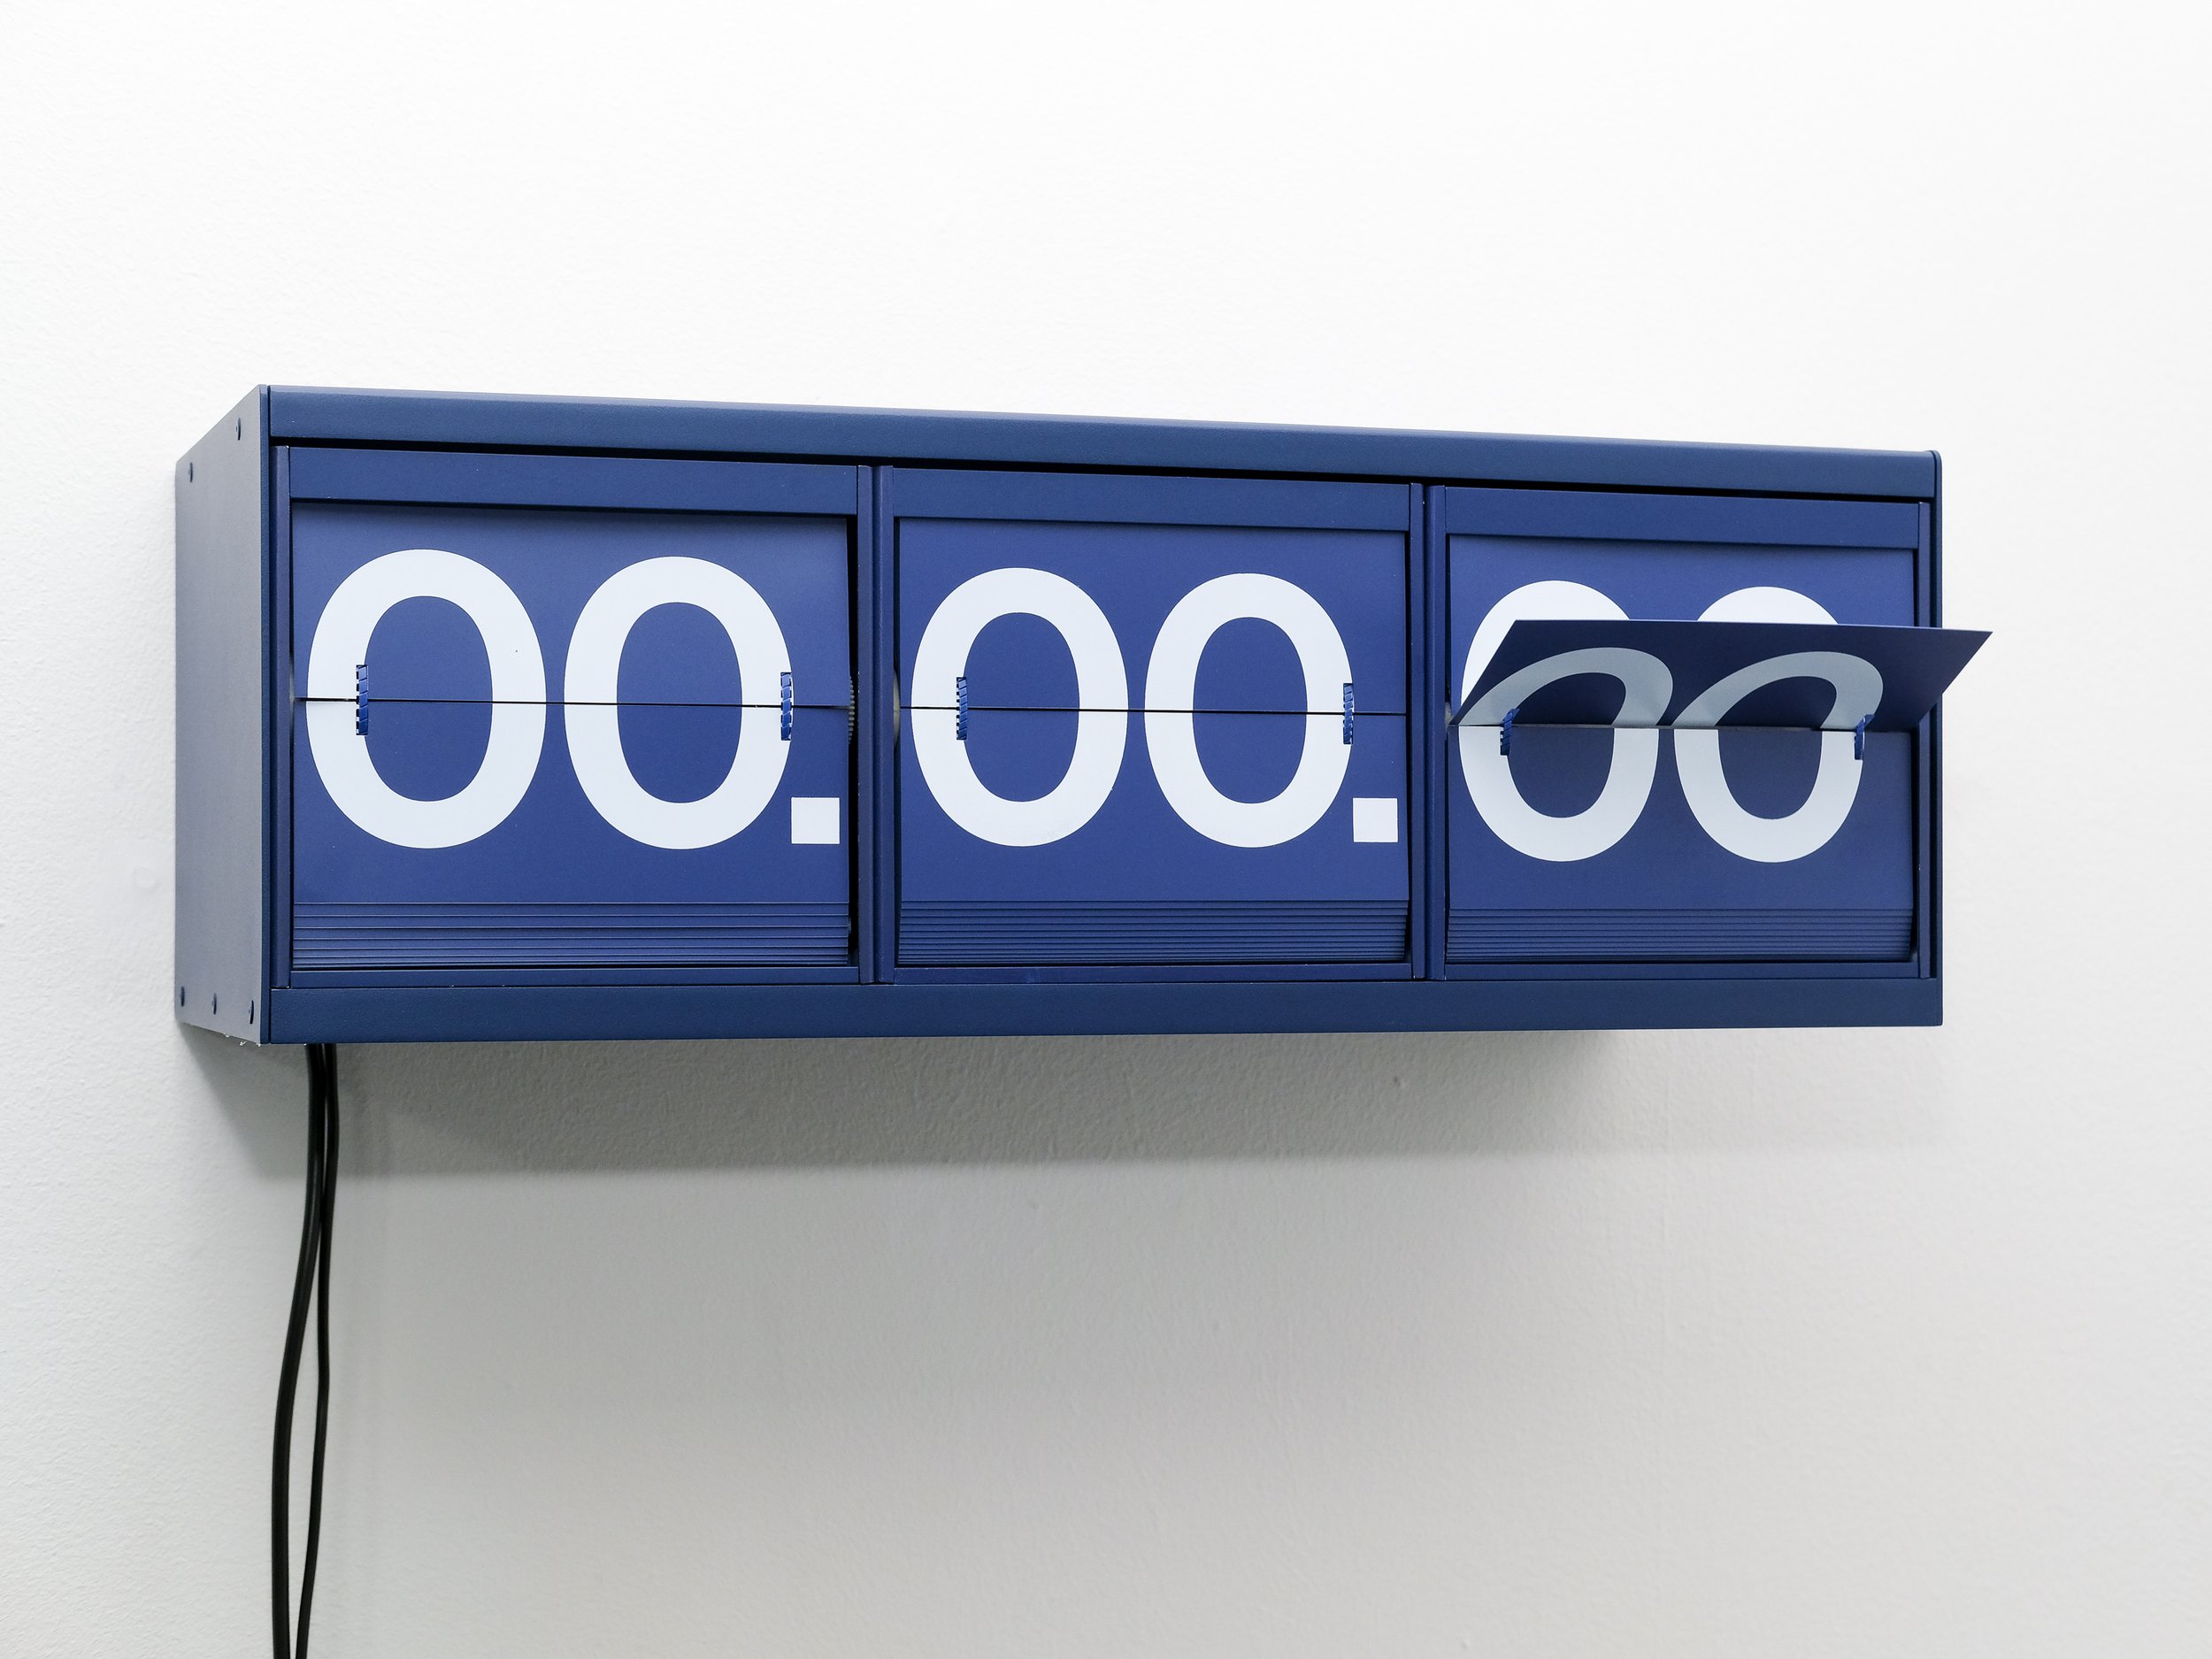   00.00.00    2022   Swiss Federal Railways split-flap display clock, GPS receiver  19 3/8 x 6 3/4 x 8 1/4 inches (49.2 x 17.1 x 20.9 cm) 